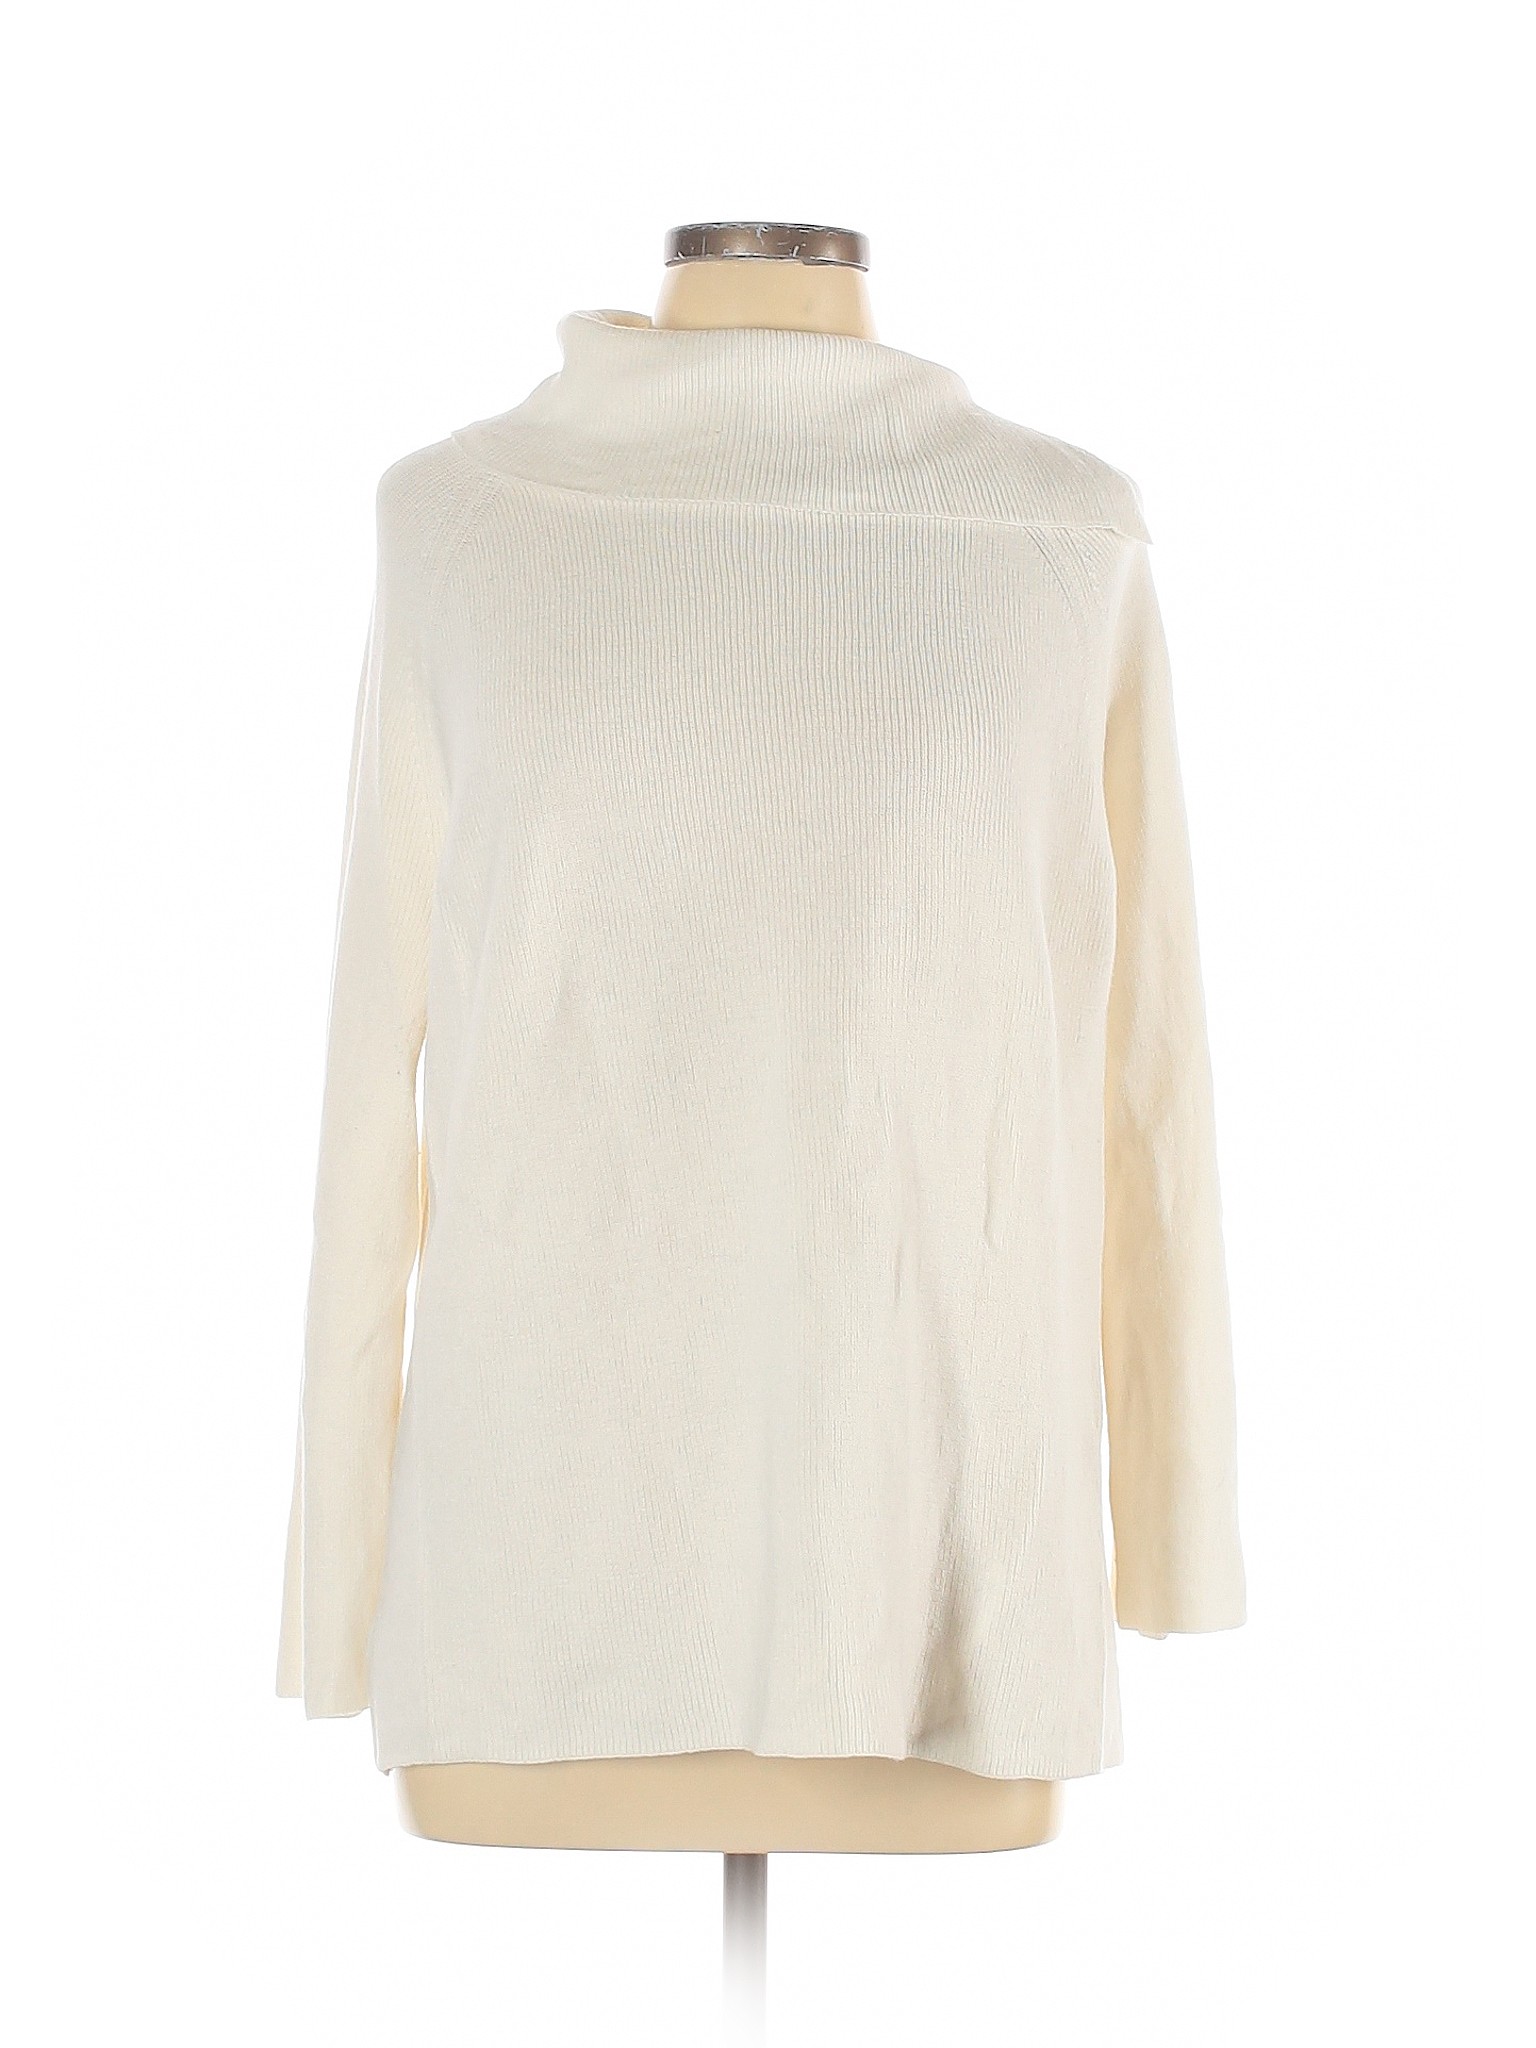 Ann Taylor Factory Women Ivory Pullover Sweater L | eBay